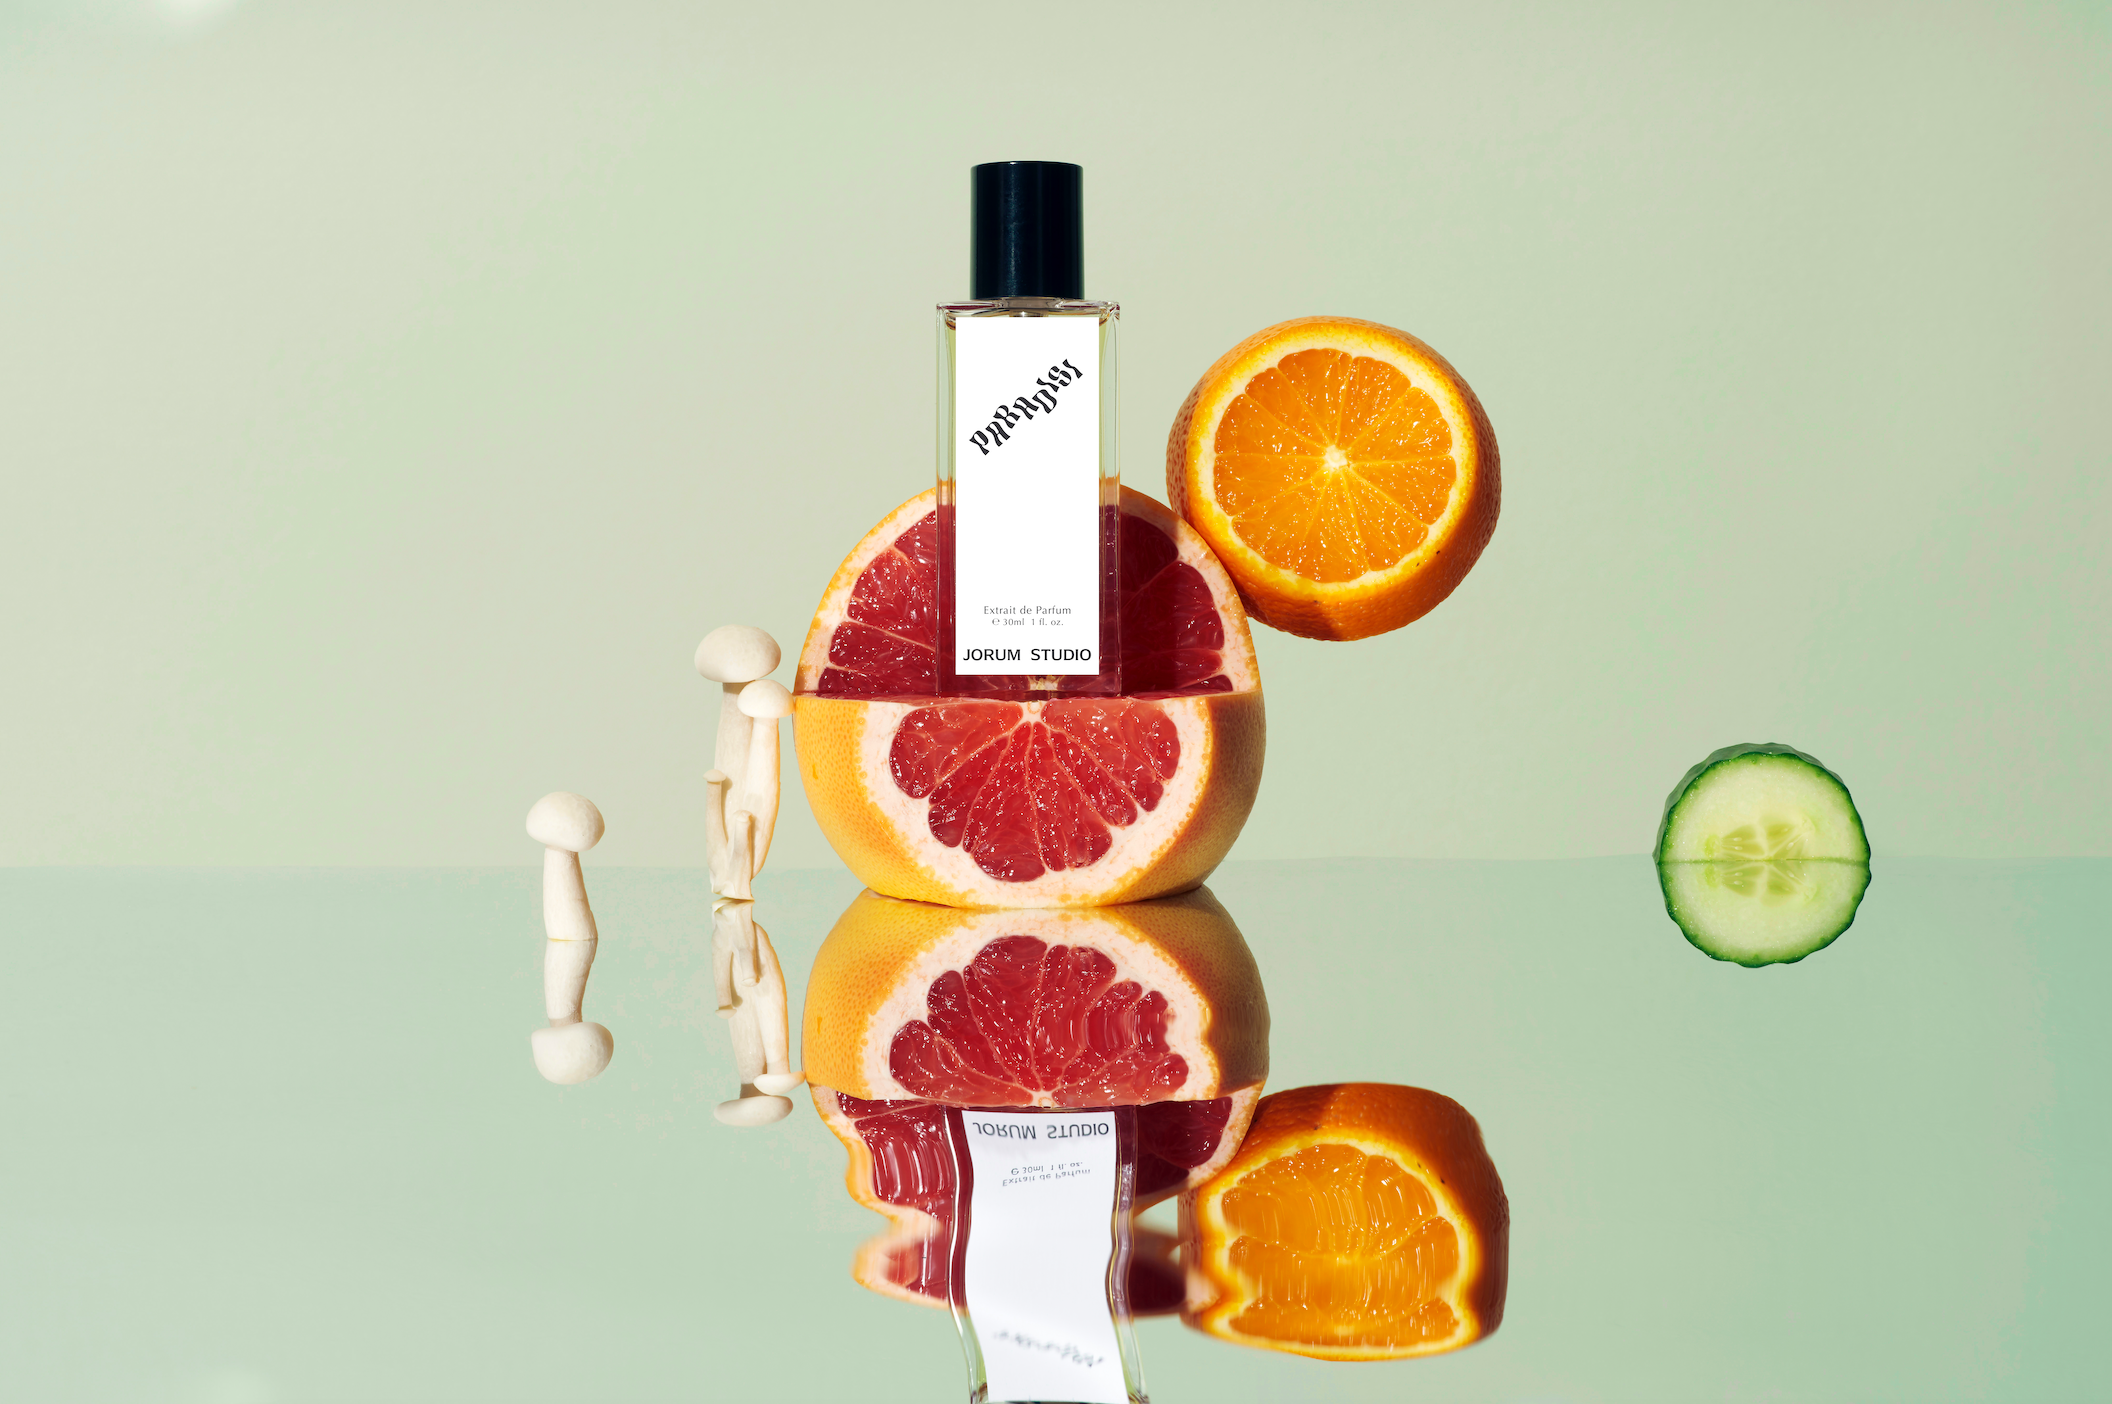 Bottle of Paradisi perfume by Jorum Studio sitting on a cut grapefruit with cucumber, mushroom and oranges